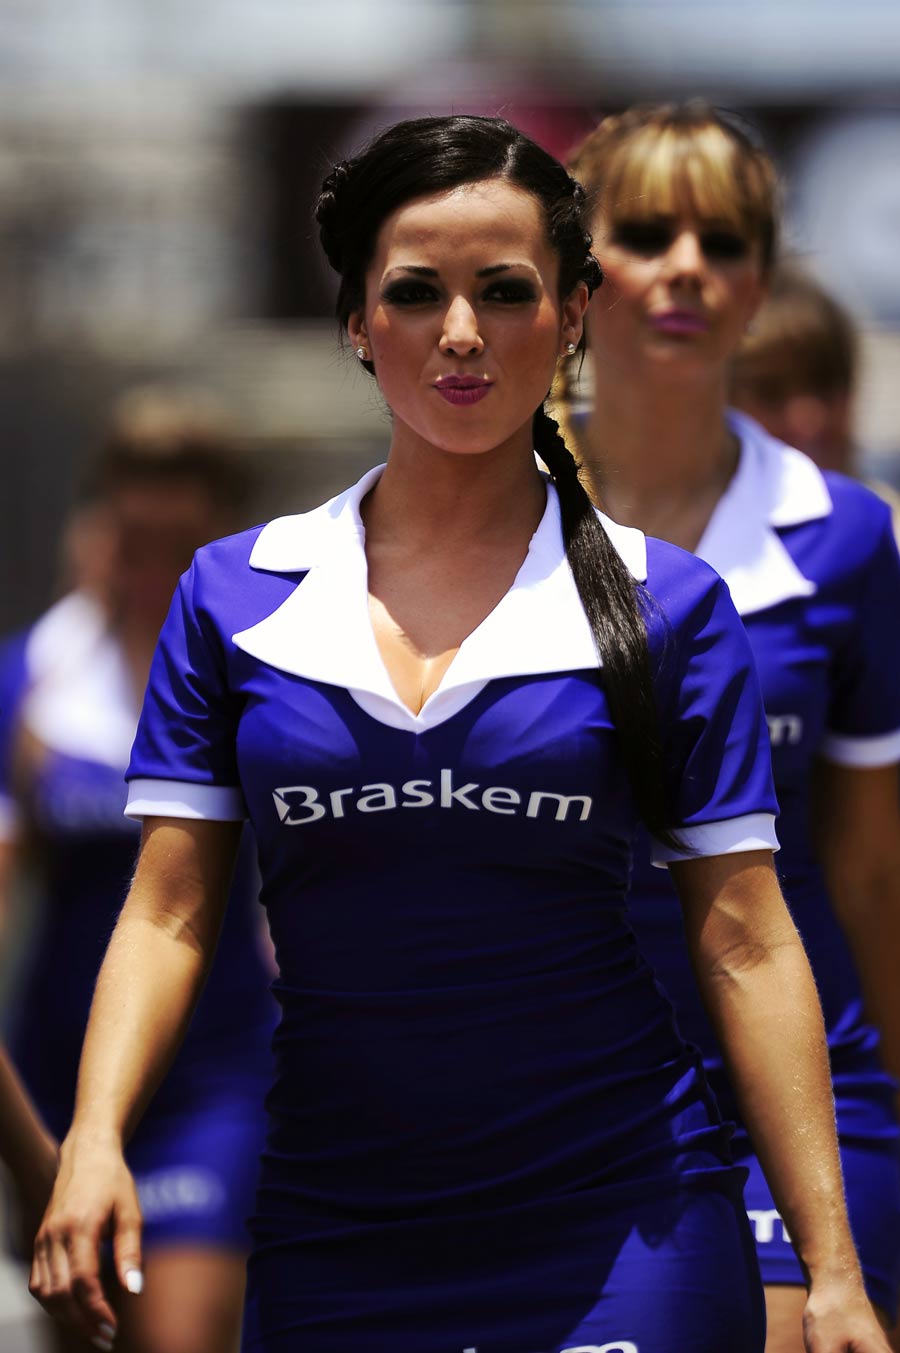 A Brazilian grid girl on race day